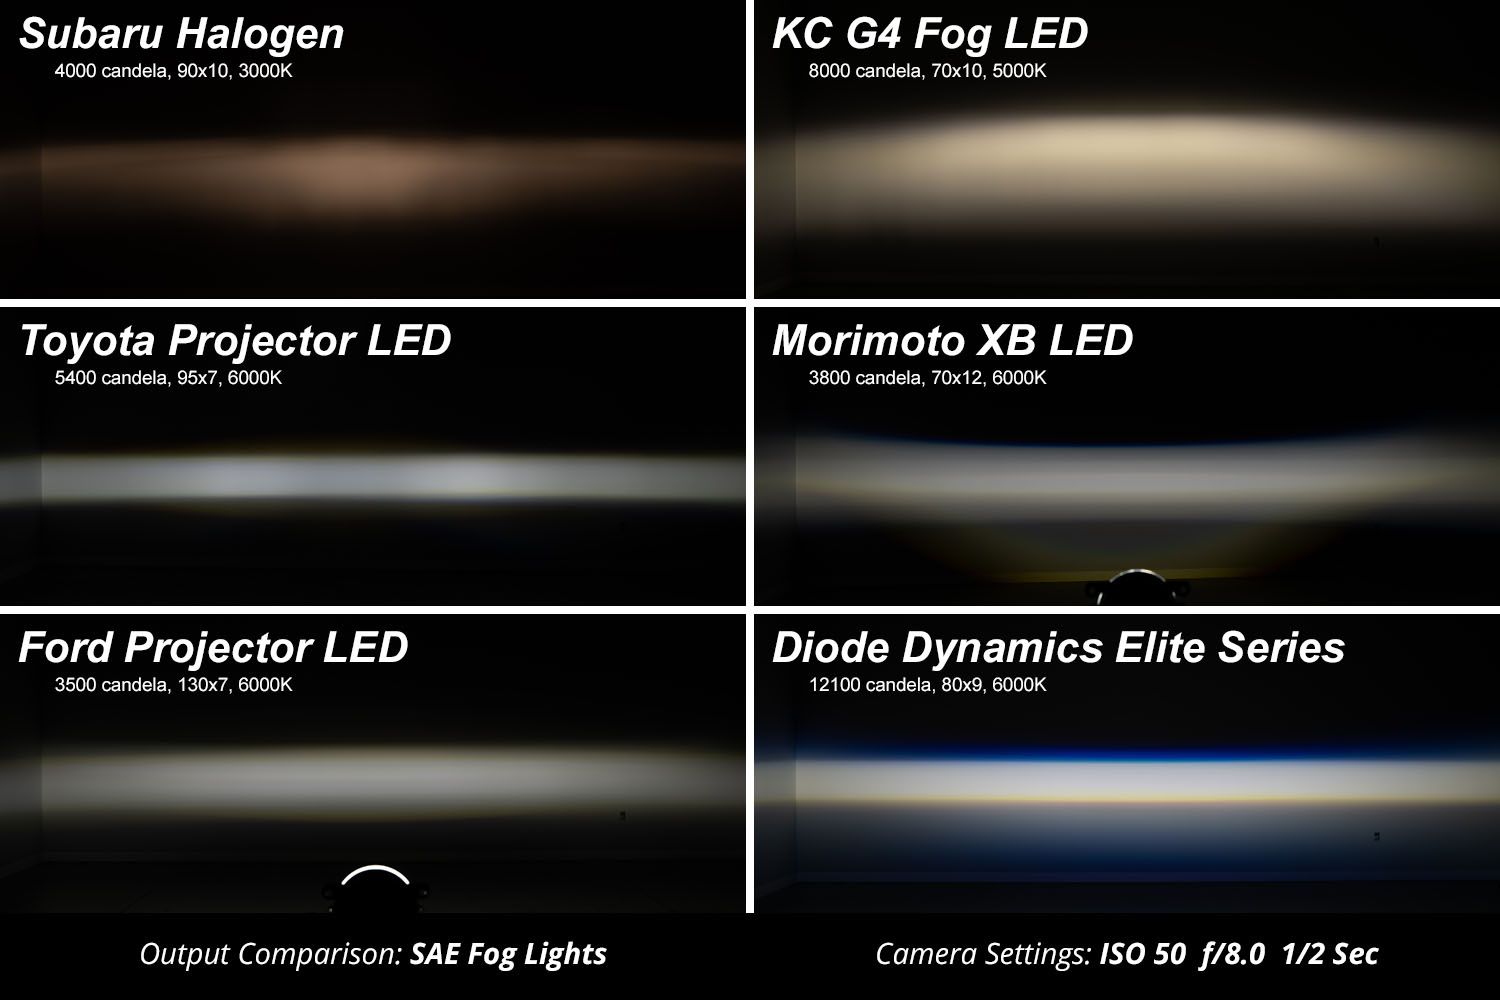 Elite Series Fog Lamps for 2010-2013 Lexus GX460 (pair)-